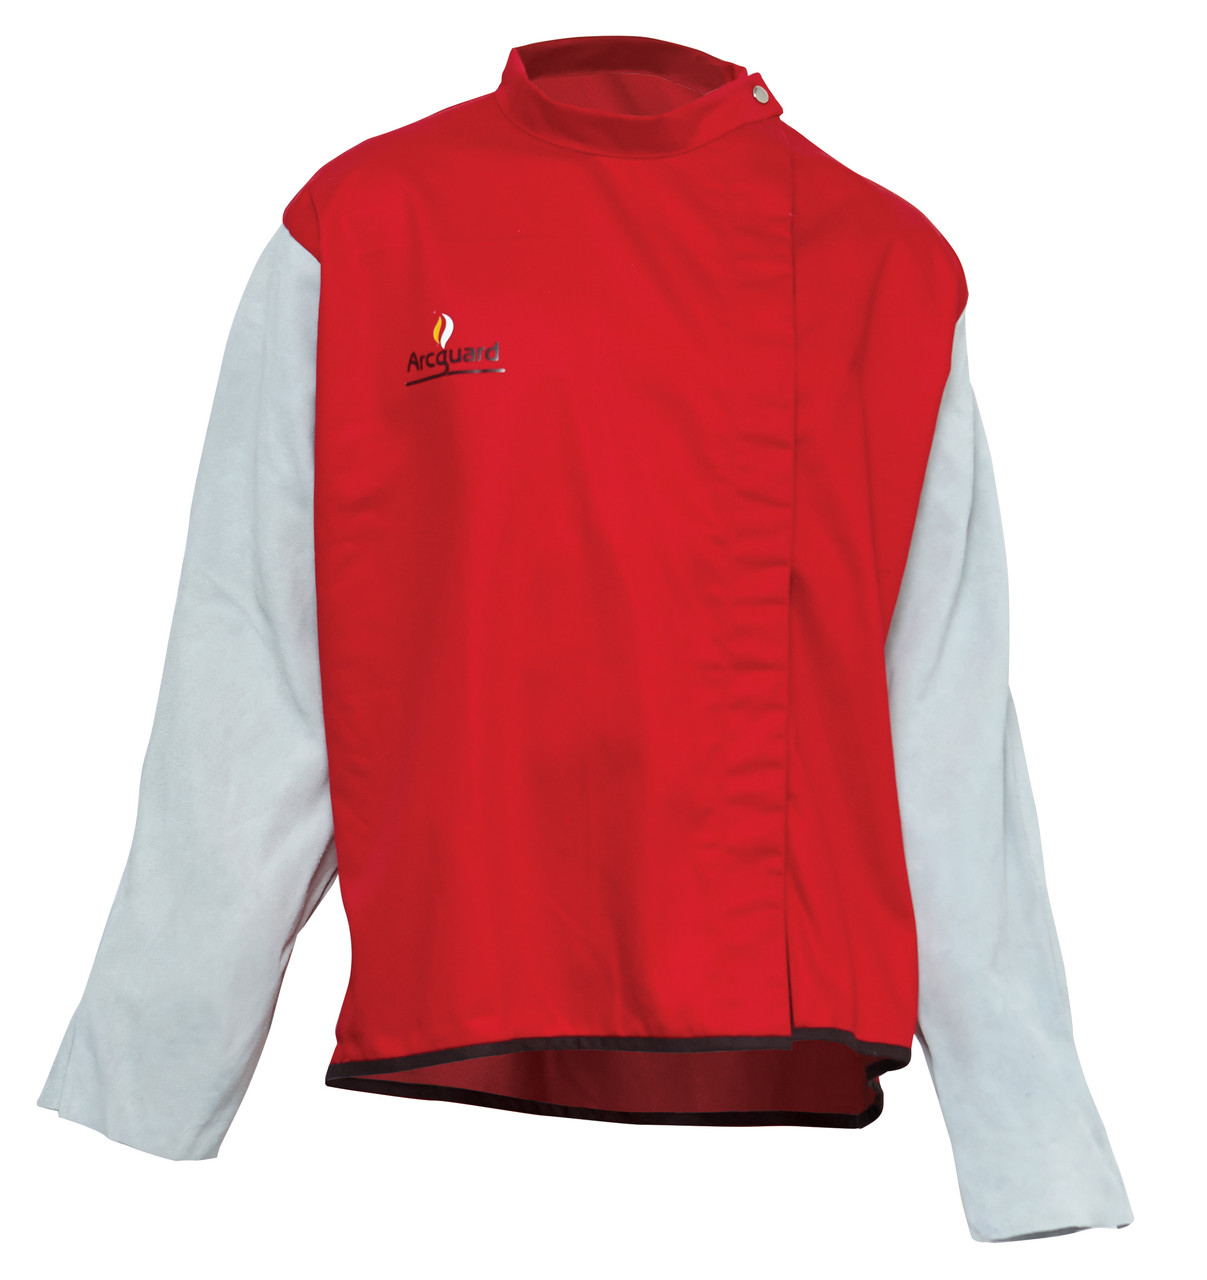 Arcguard Welding Jacket With Leather Sleeves - 2Xlarge